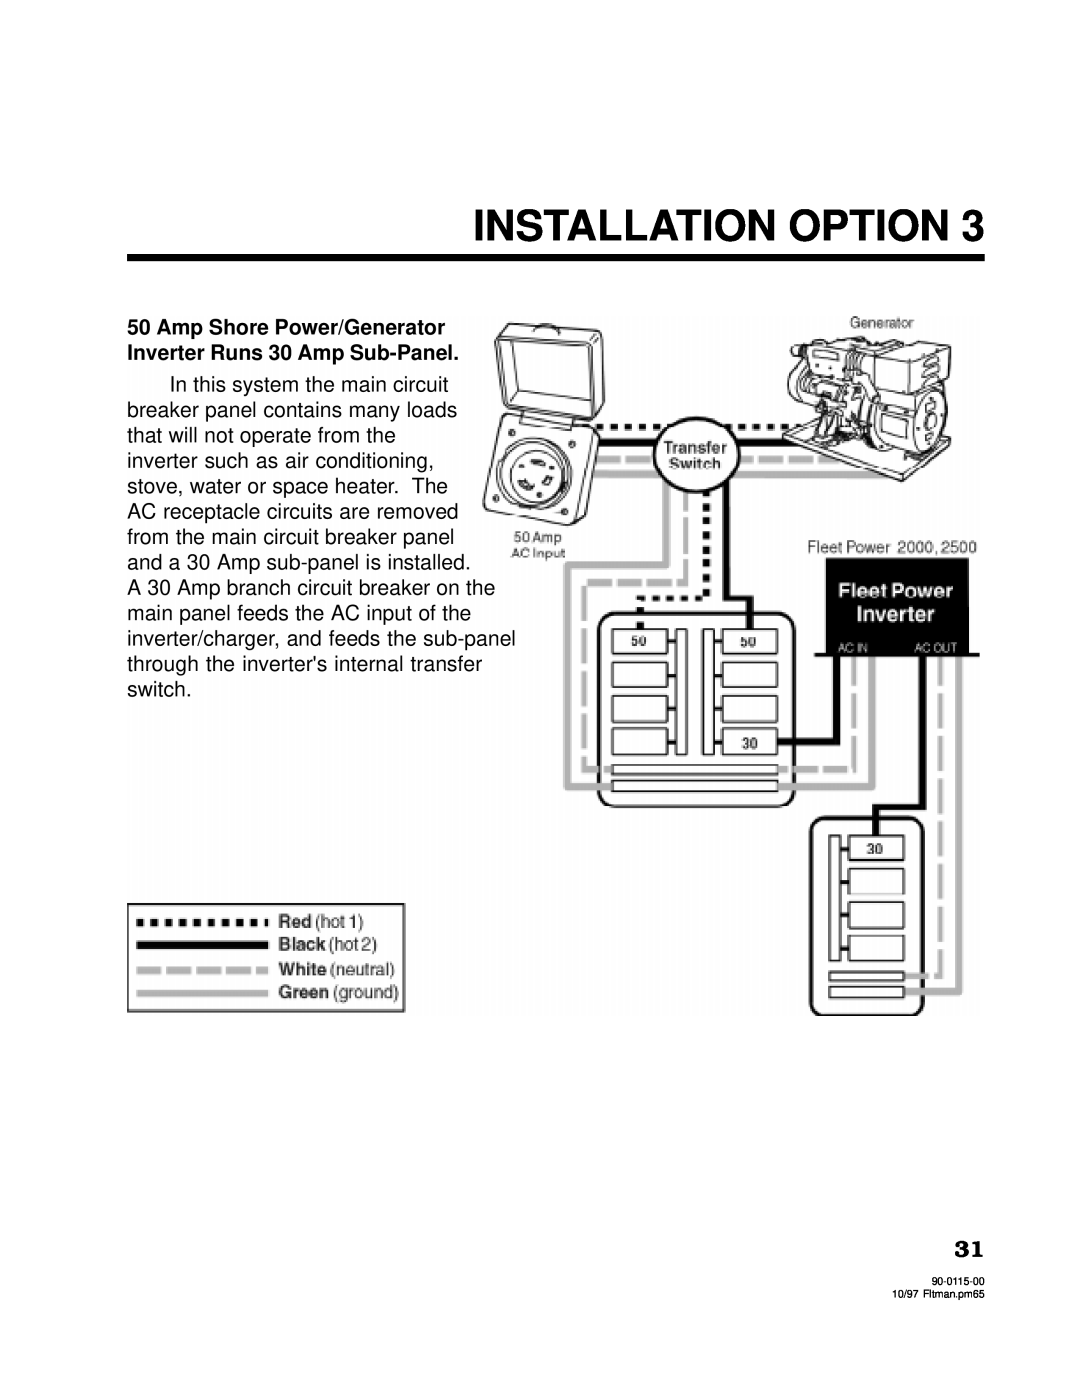 Xantrex Technology 2000, 2500 owner manual Installation Option, Amp Shore Power/Generator, Inverter Runs 30 Amp Sub-Panel 